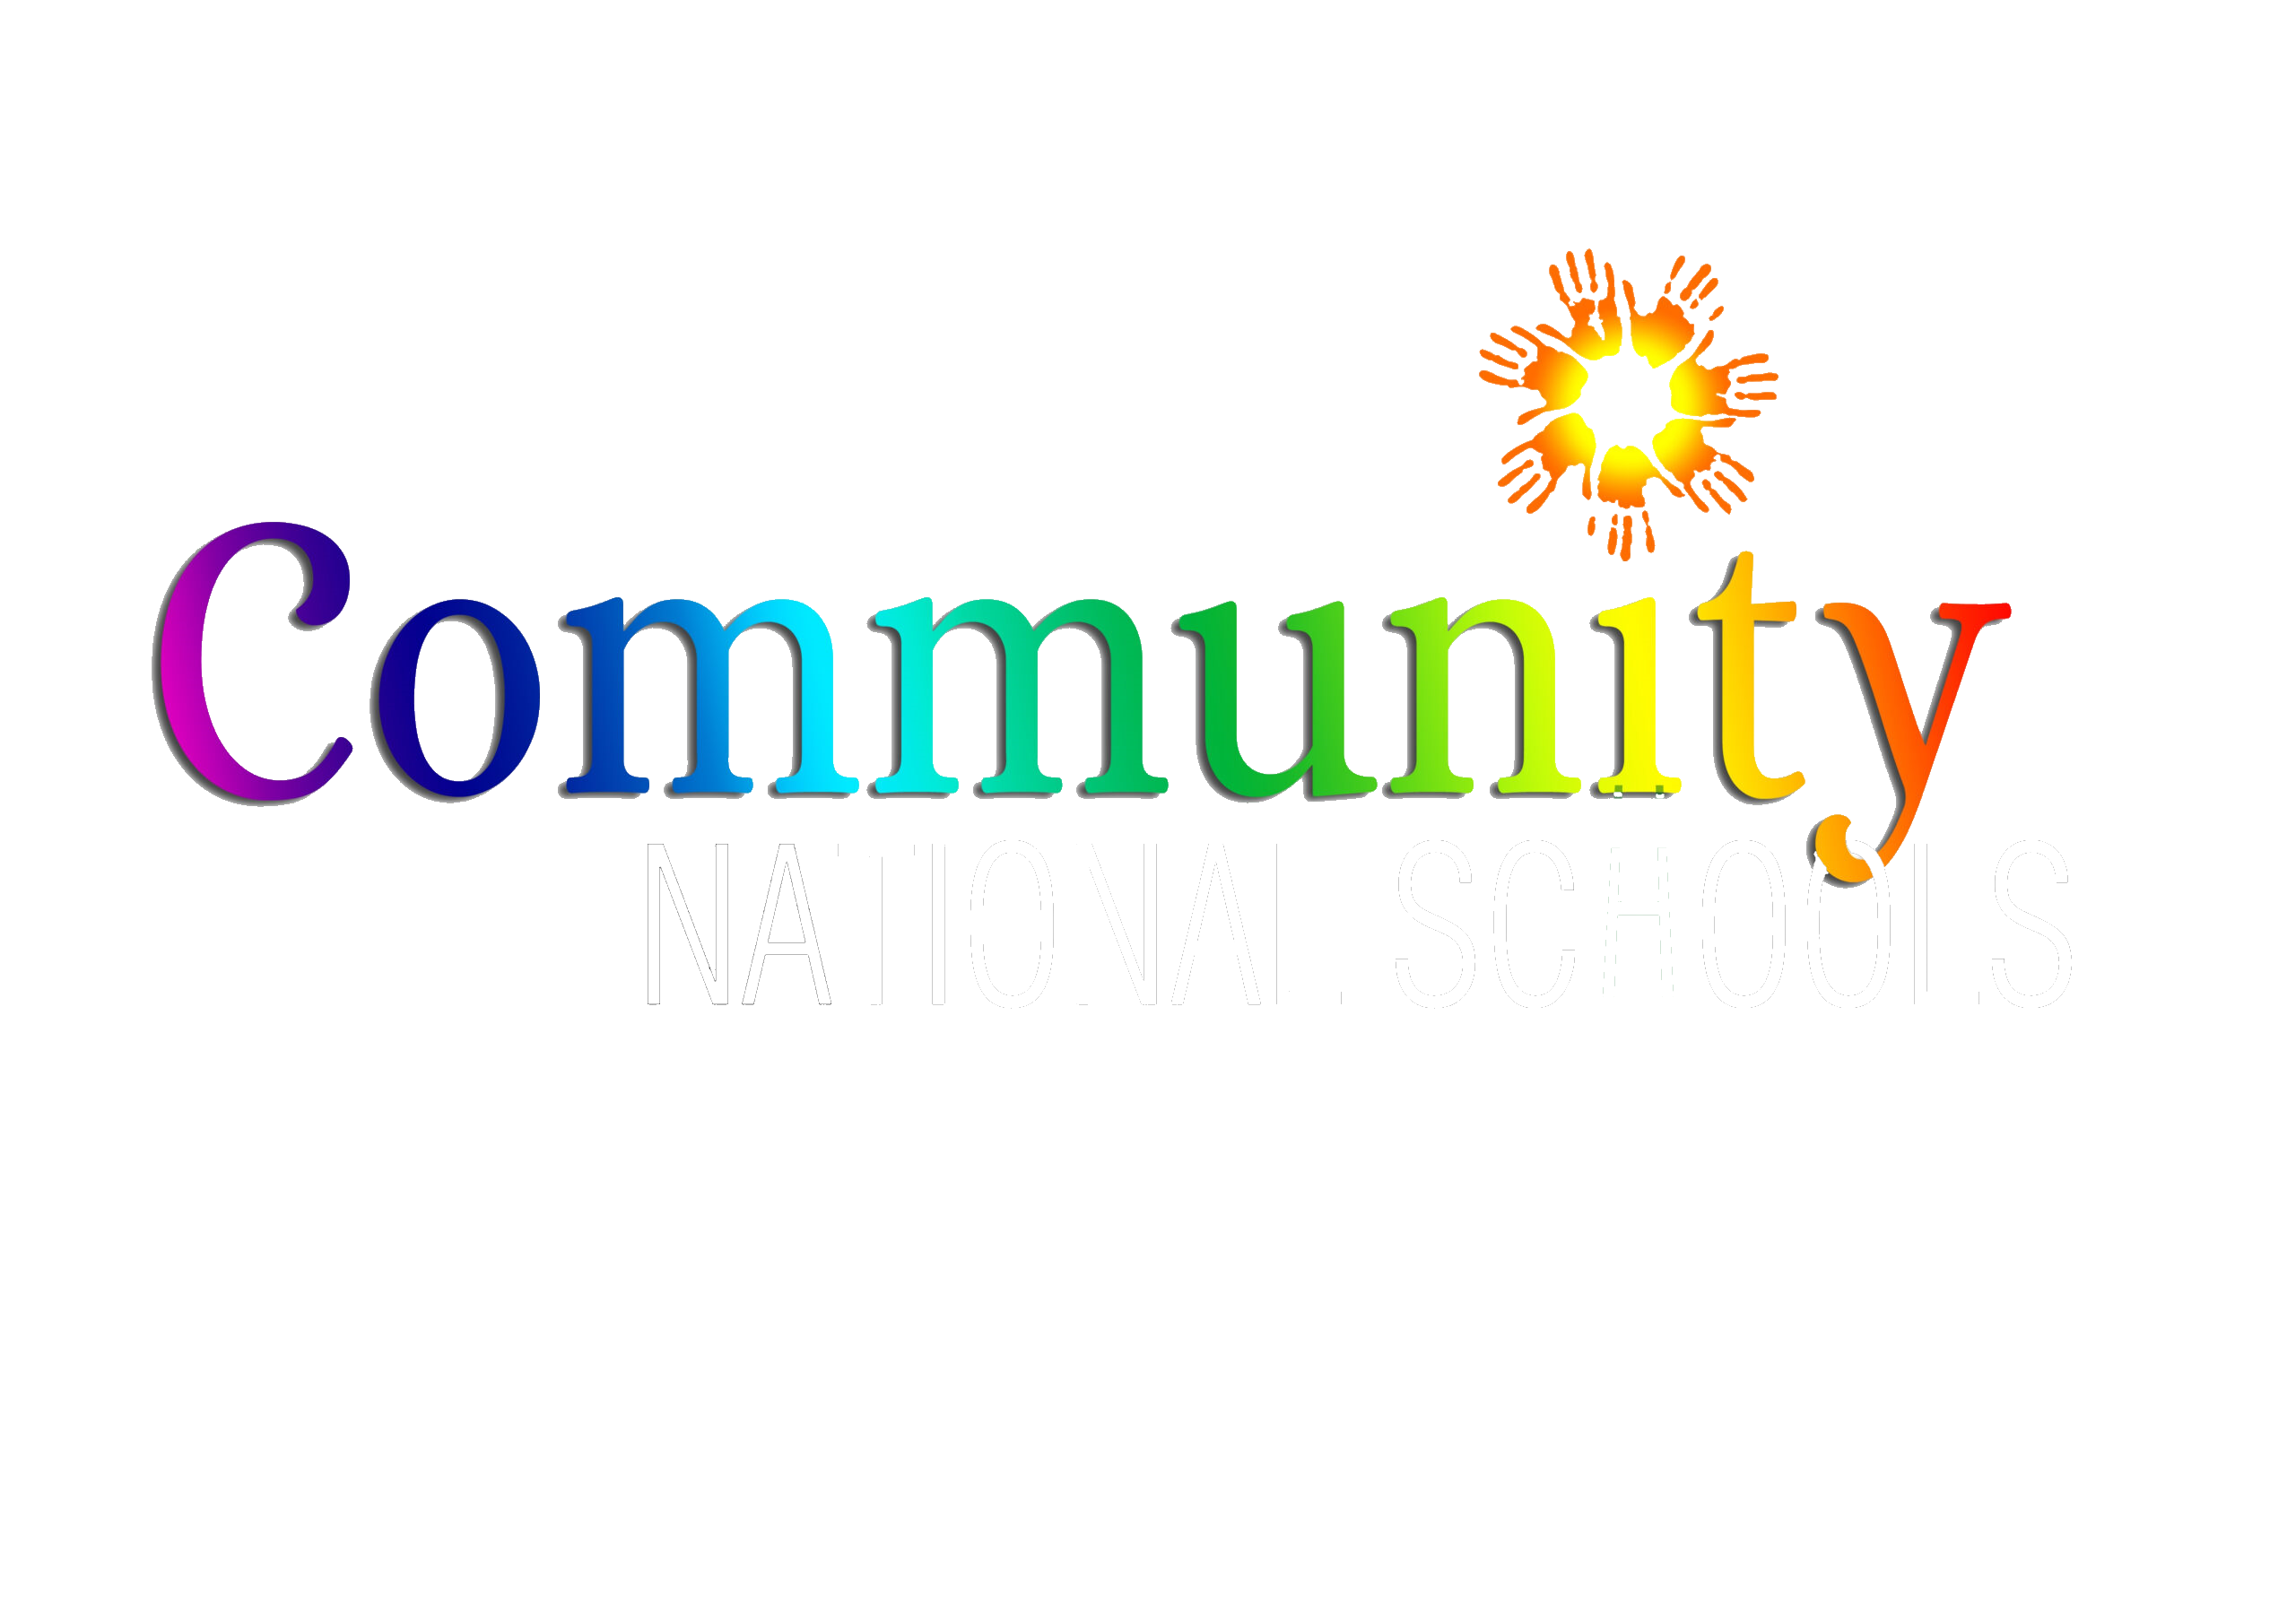 Community National school logo